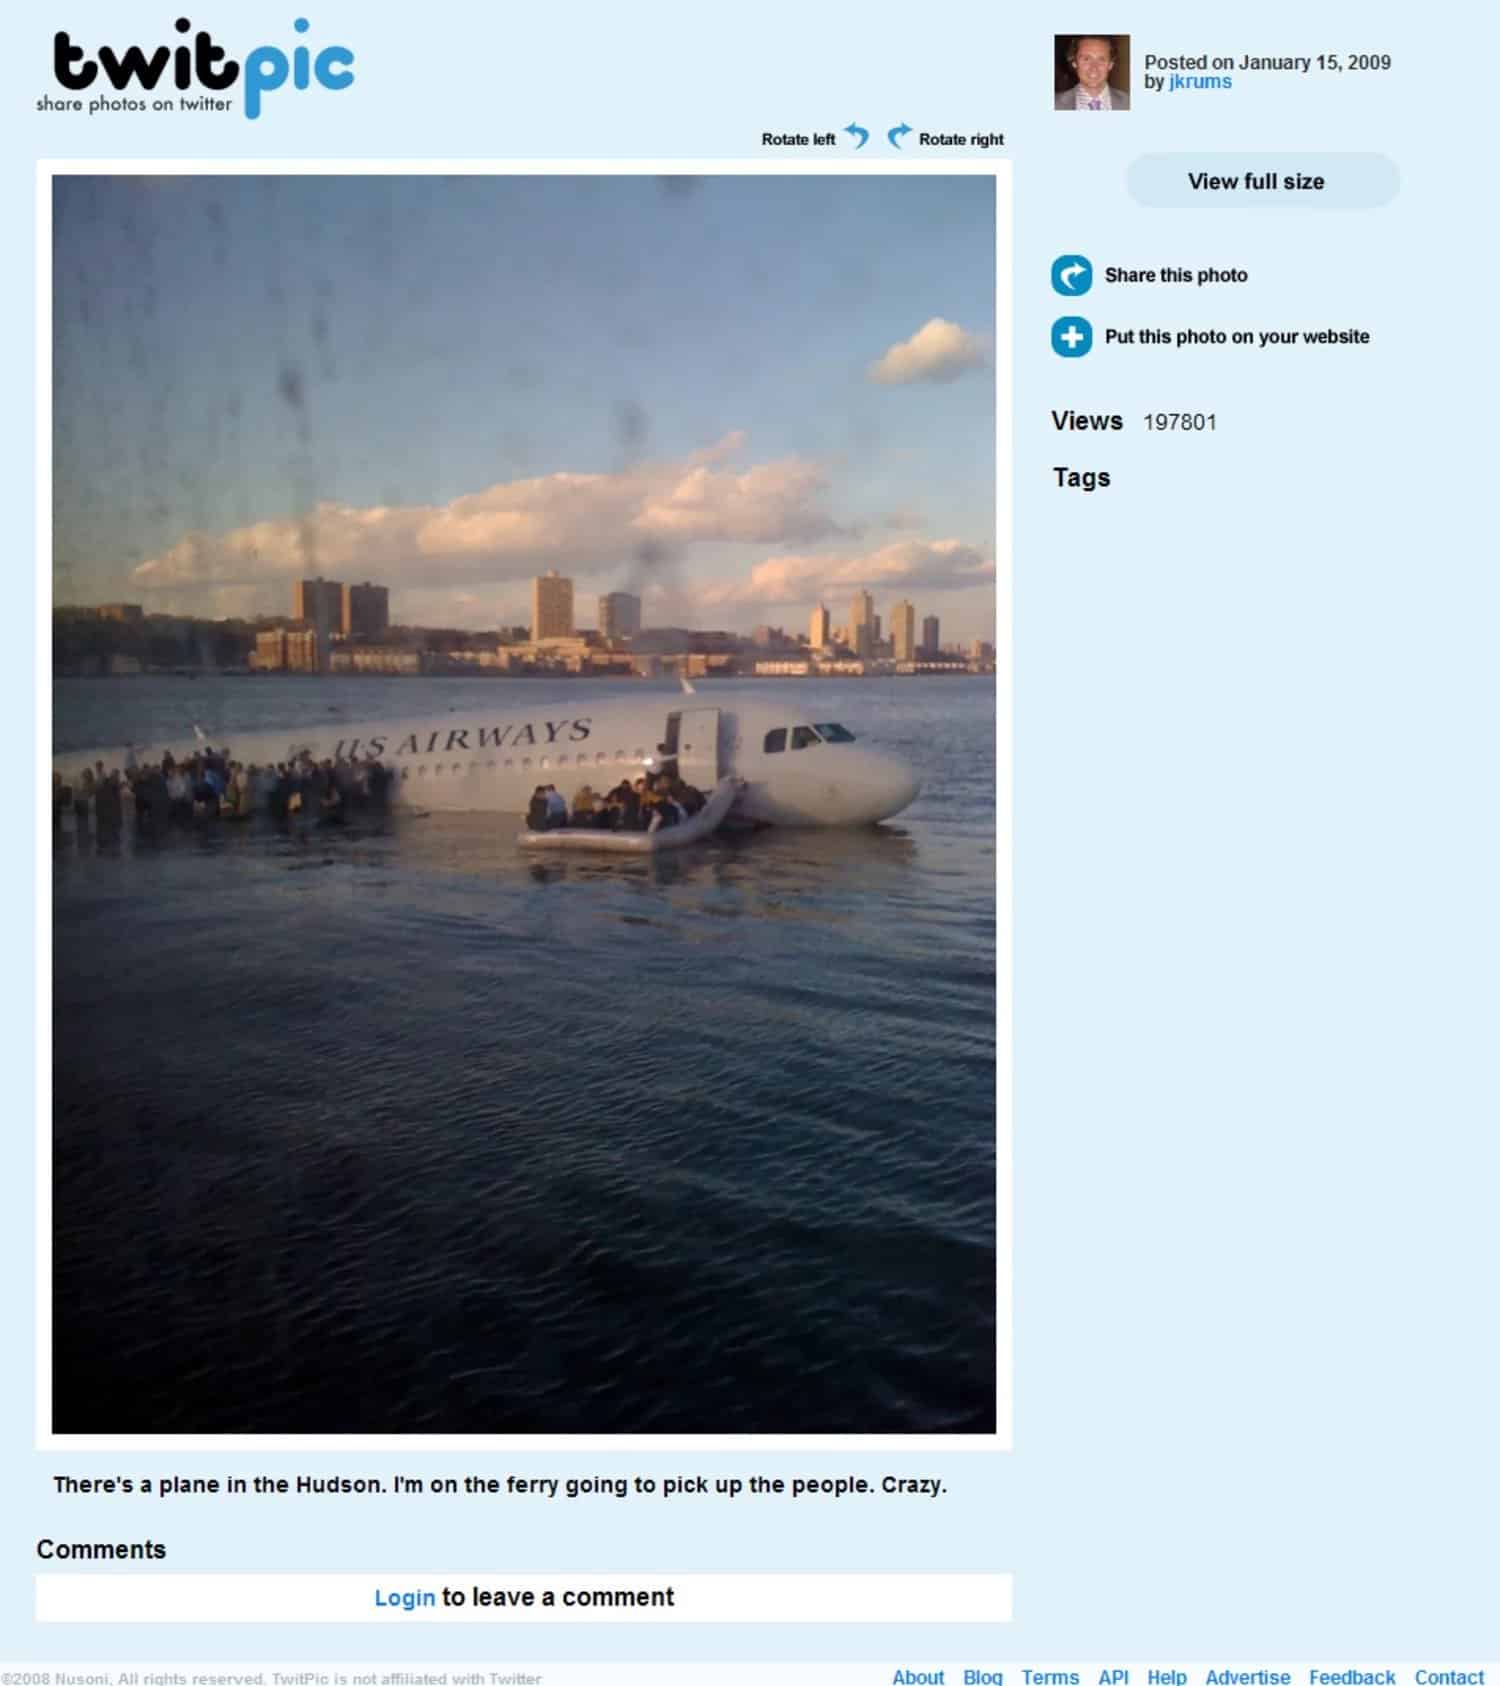 Photo of Hudson River plane crash on TwitPic.